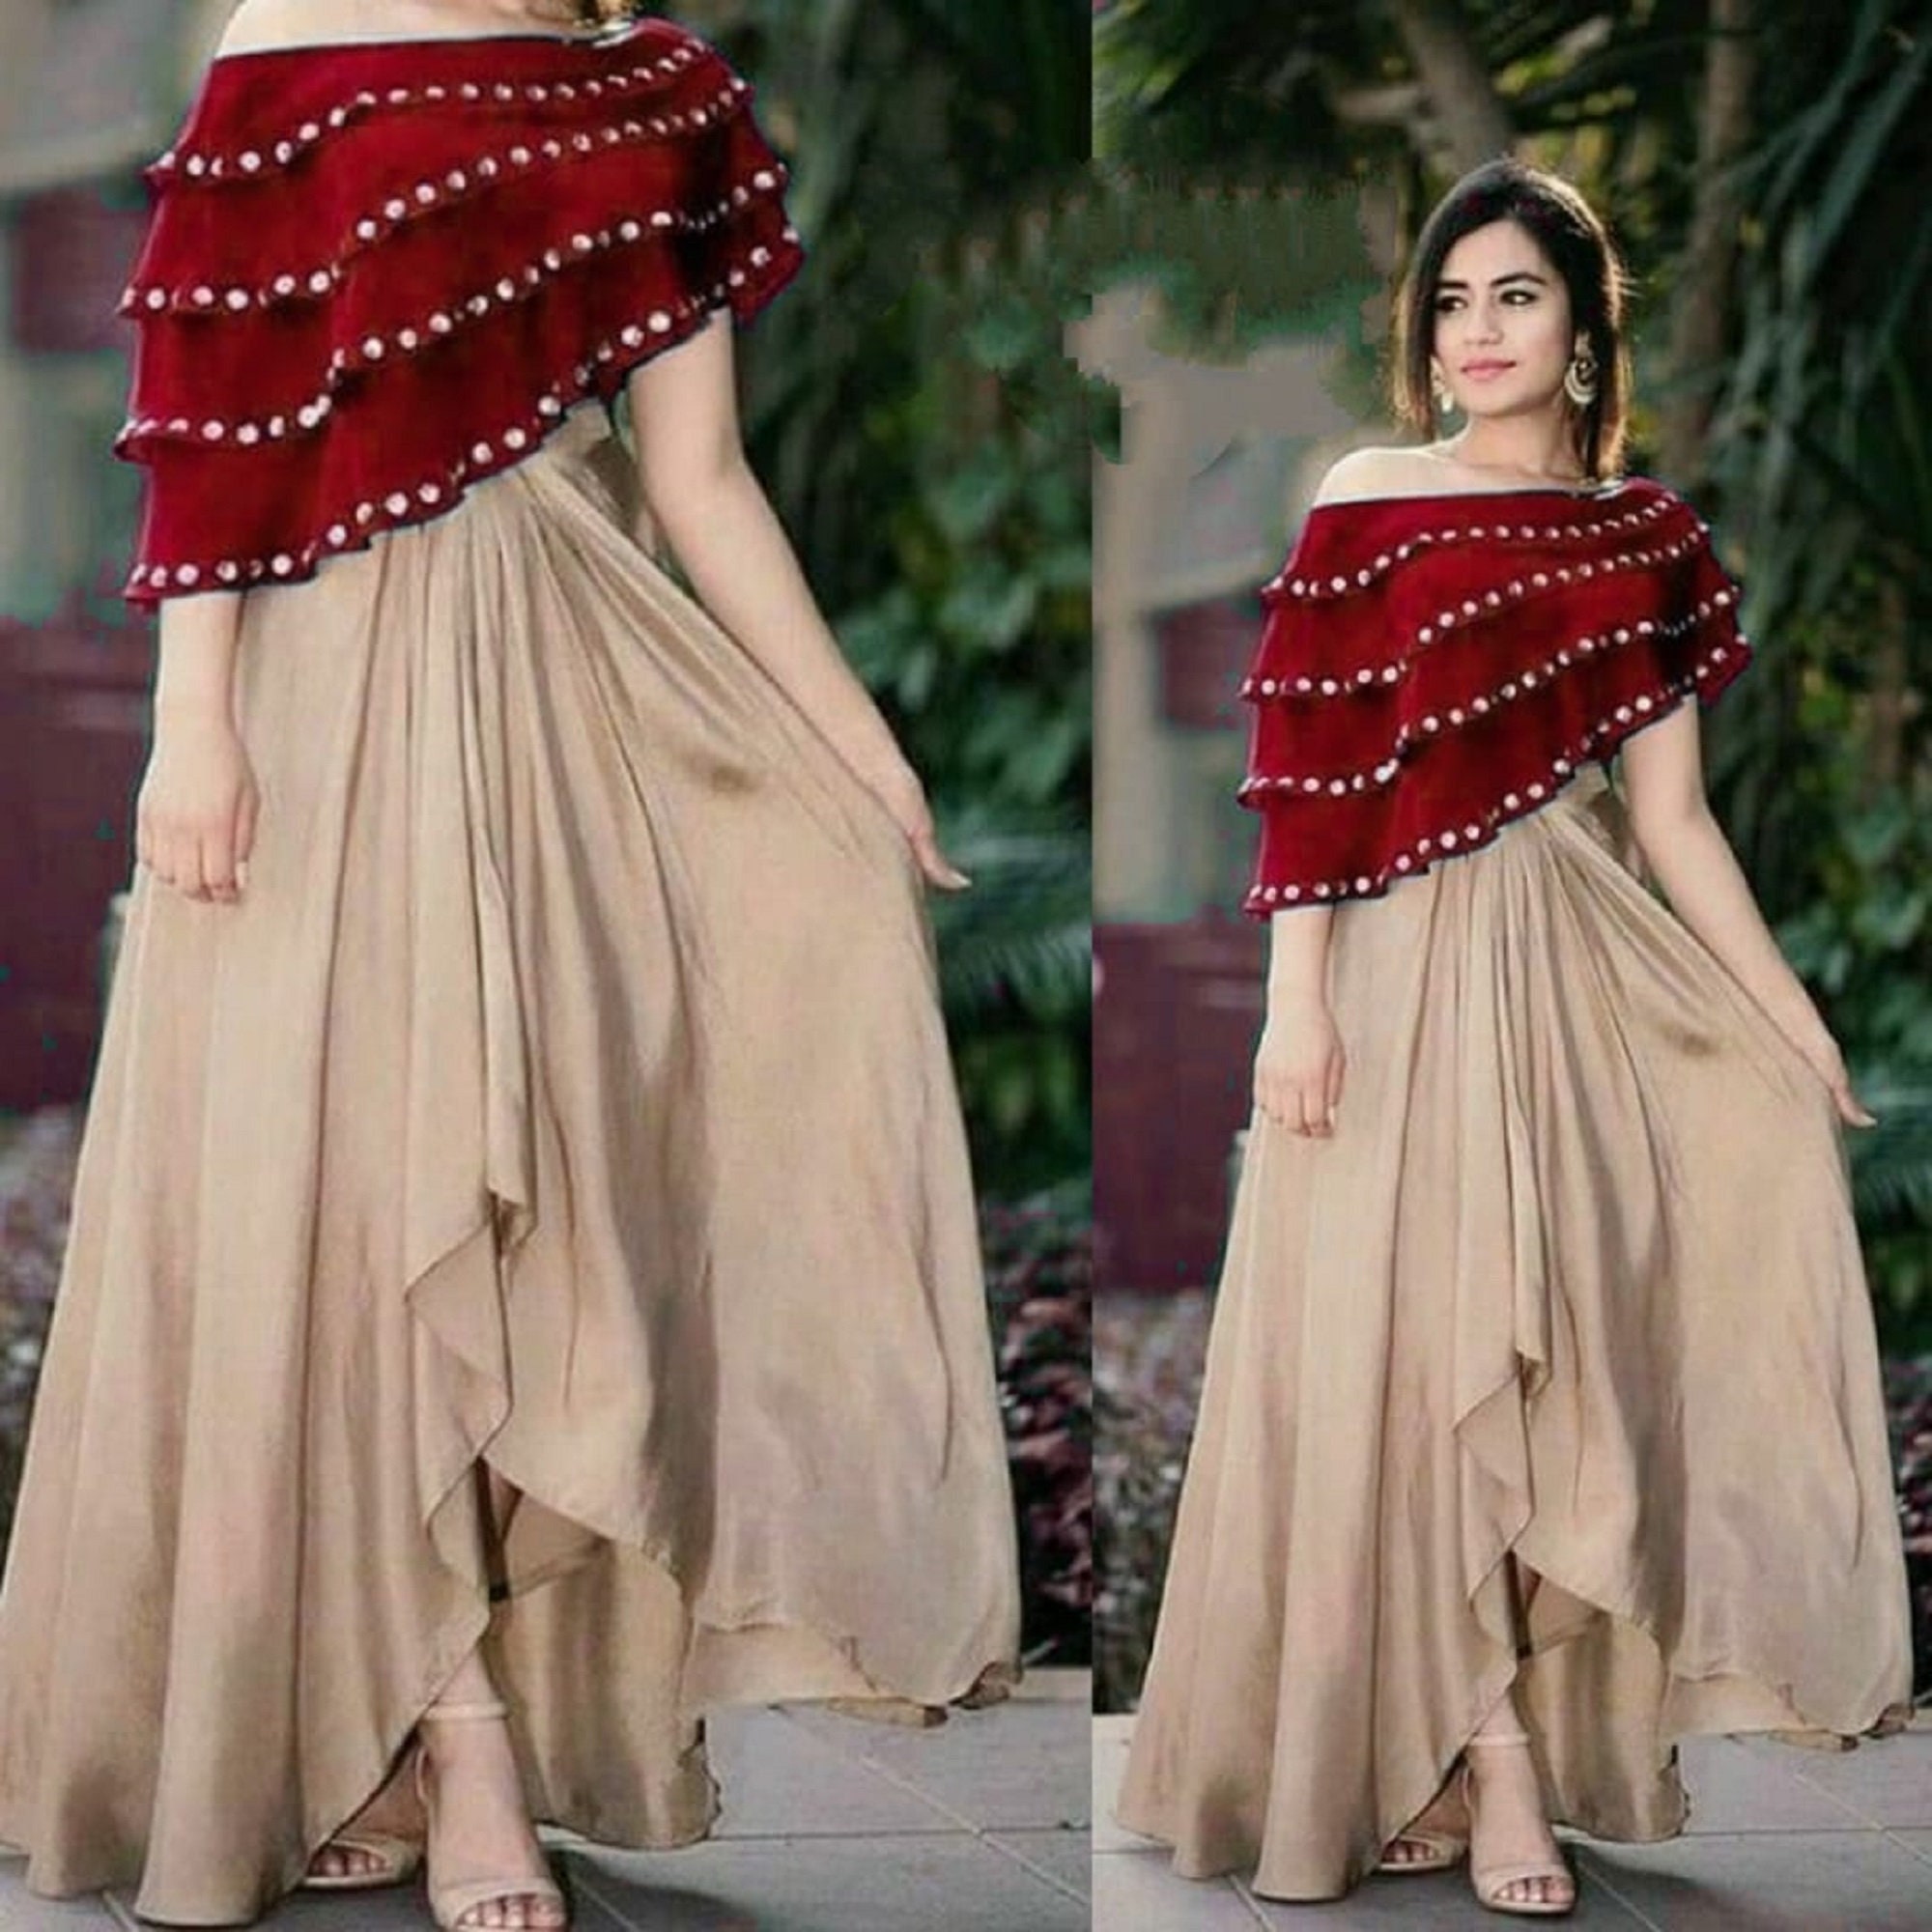 Indo Western Dresses - Buy Indo Western Wear for Women Online - Indya